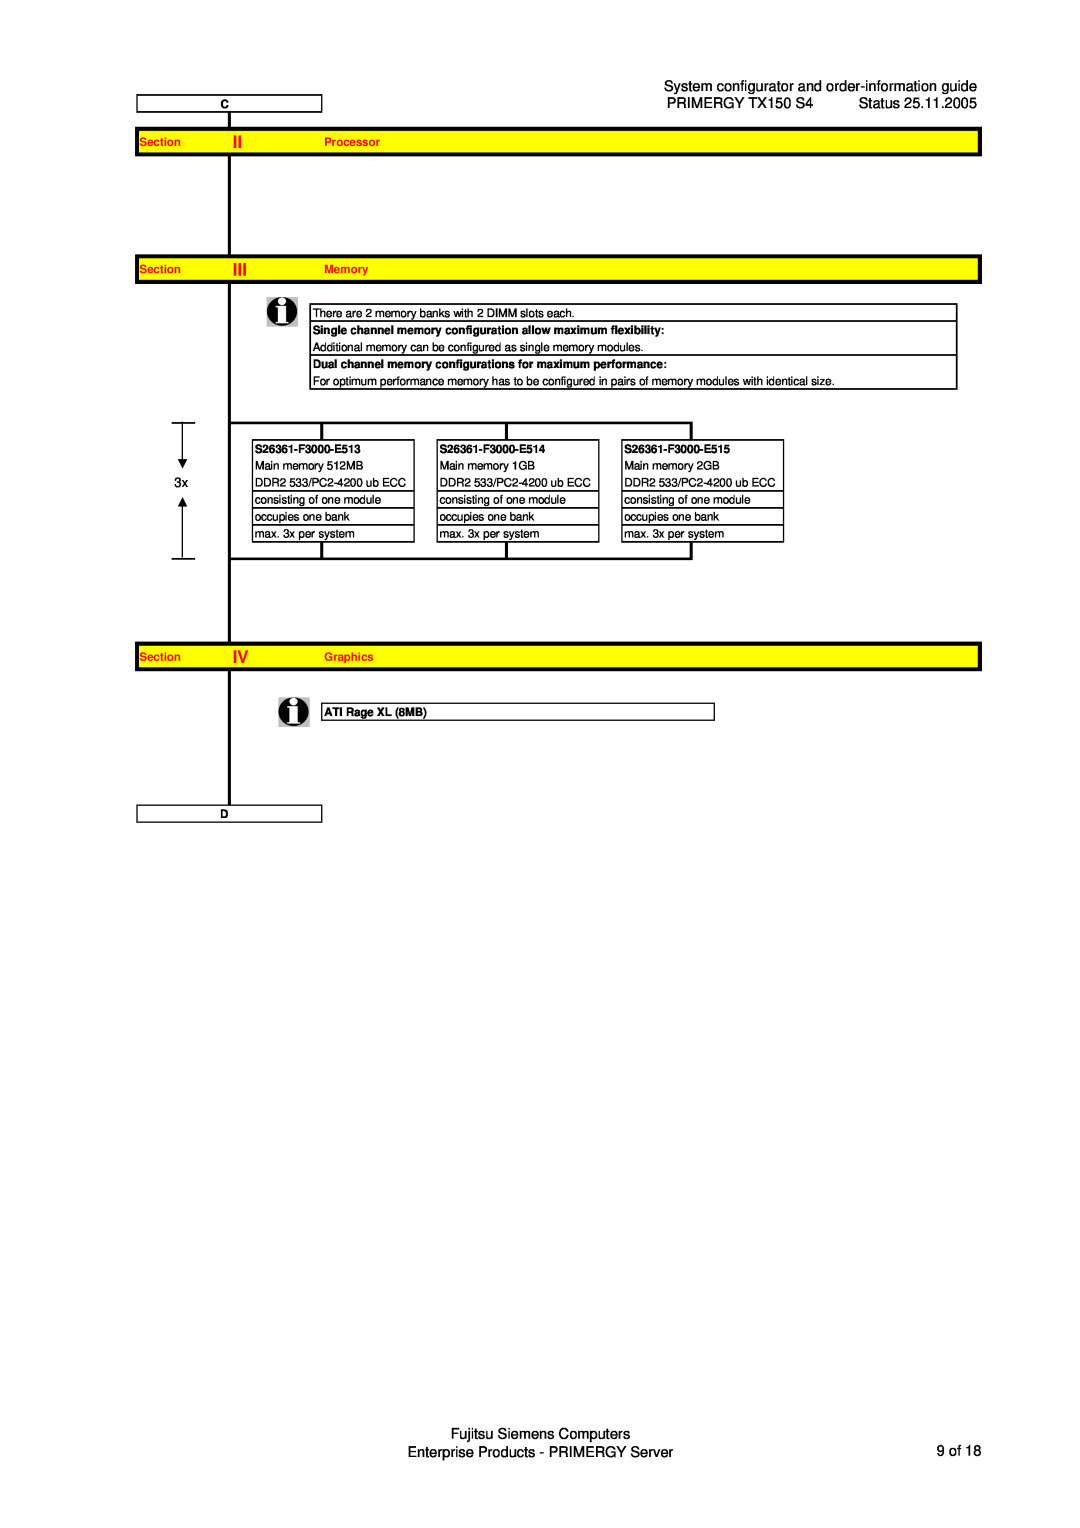 Fujitsu System configurator and order-information guide, PRIMERGY TX150 S4, Fujitsu Siemens Computers, Status, 9 of 